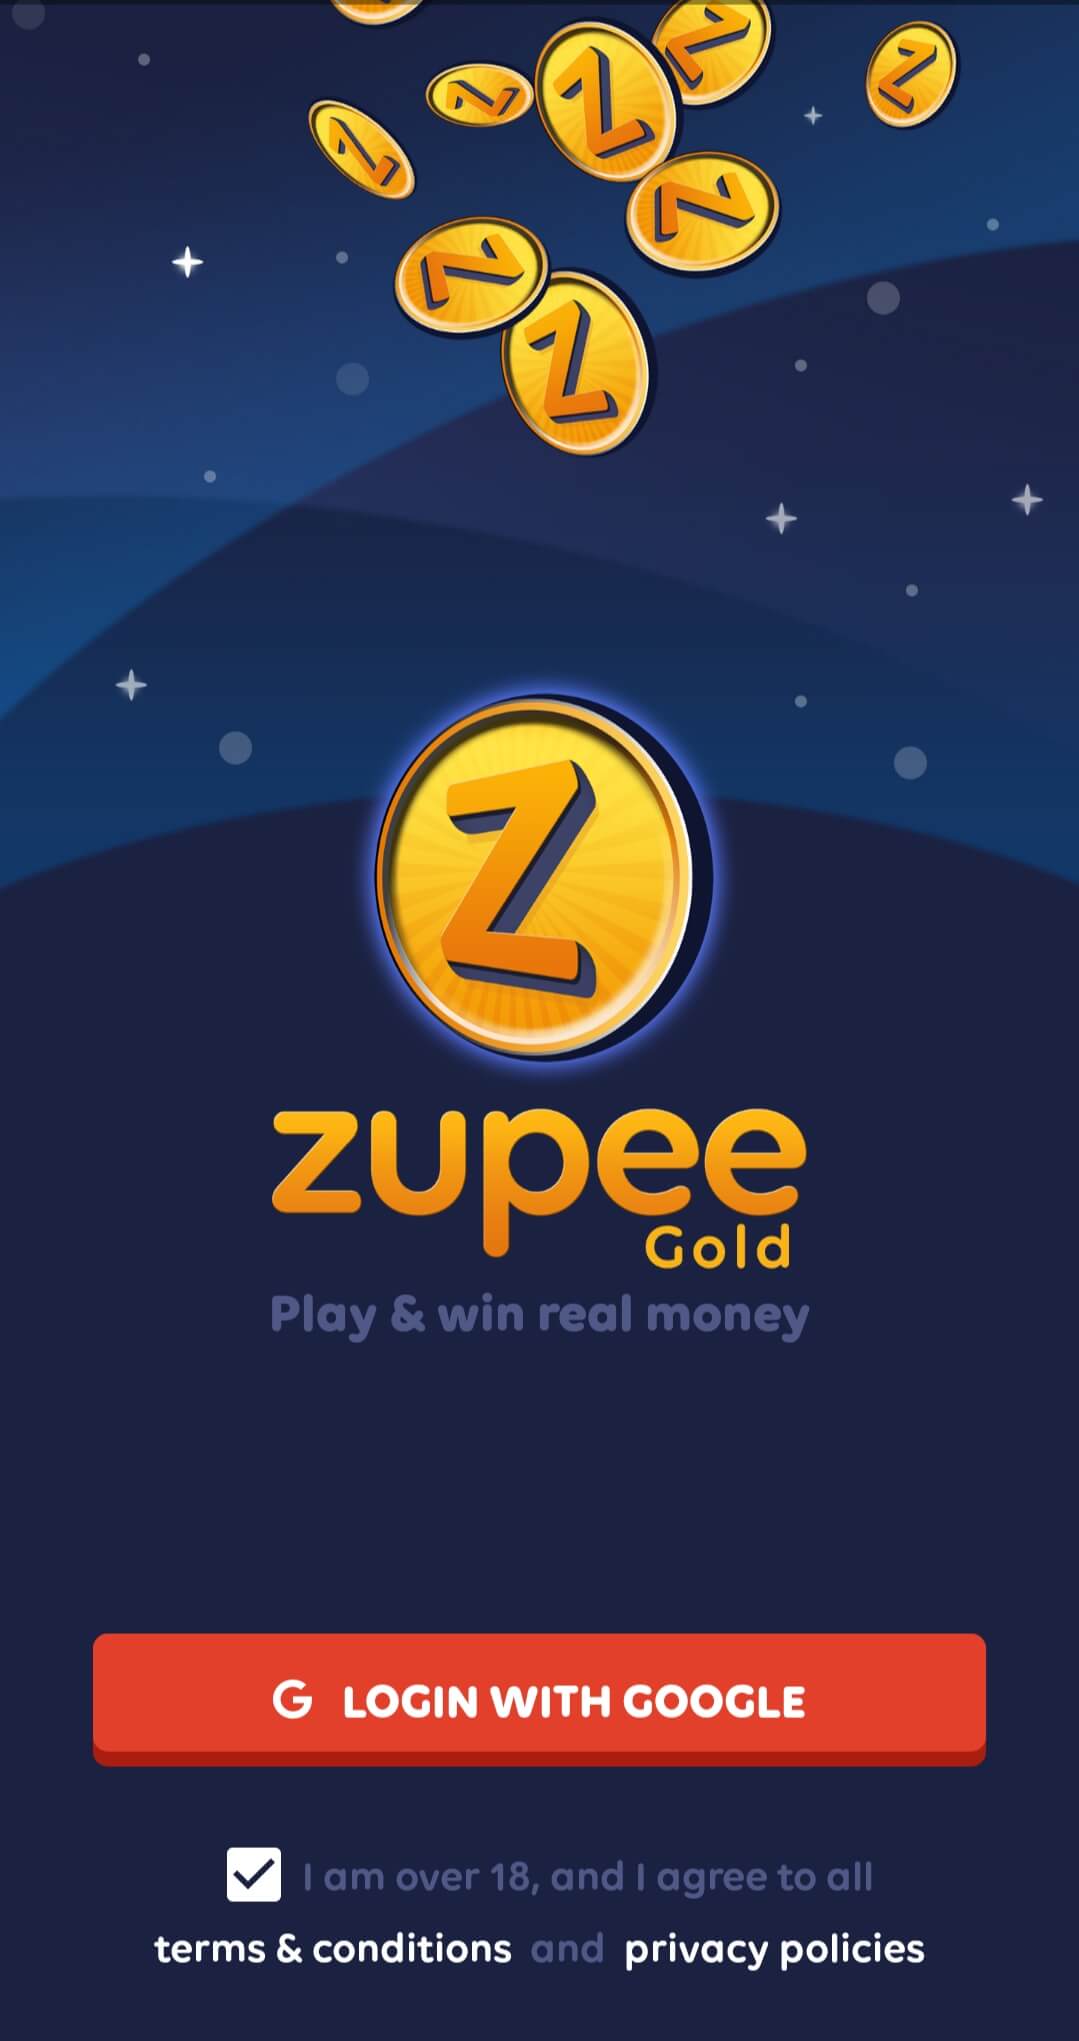 Gaming Startup Zupee raised around $10M from WestCap Group